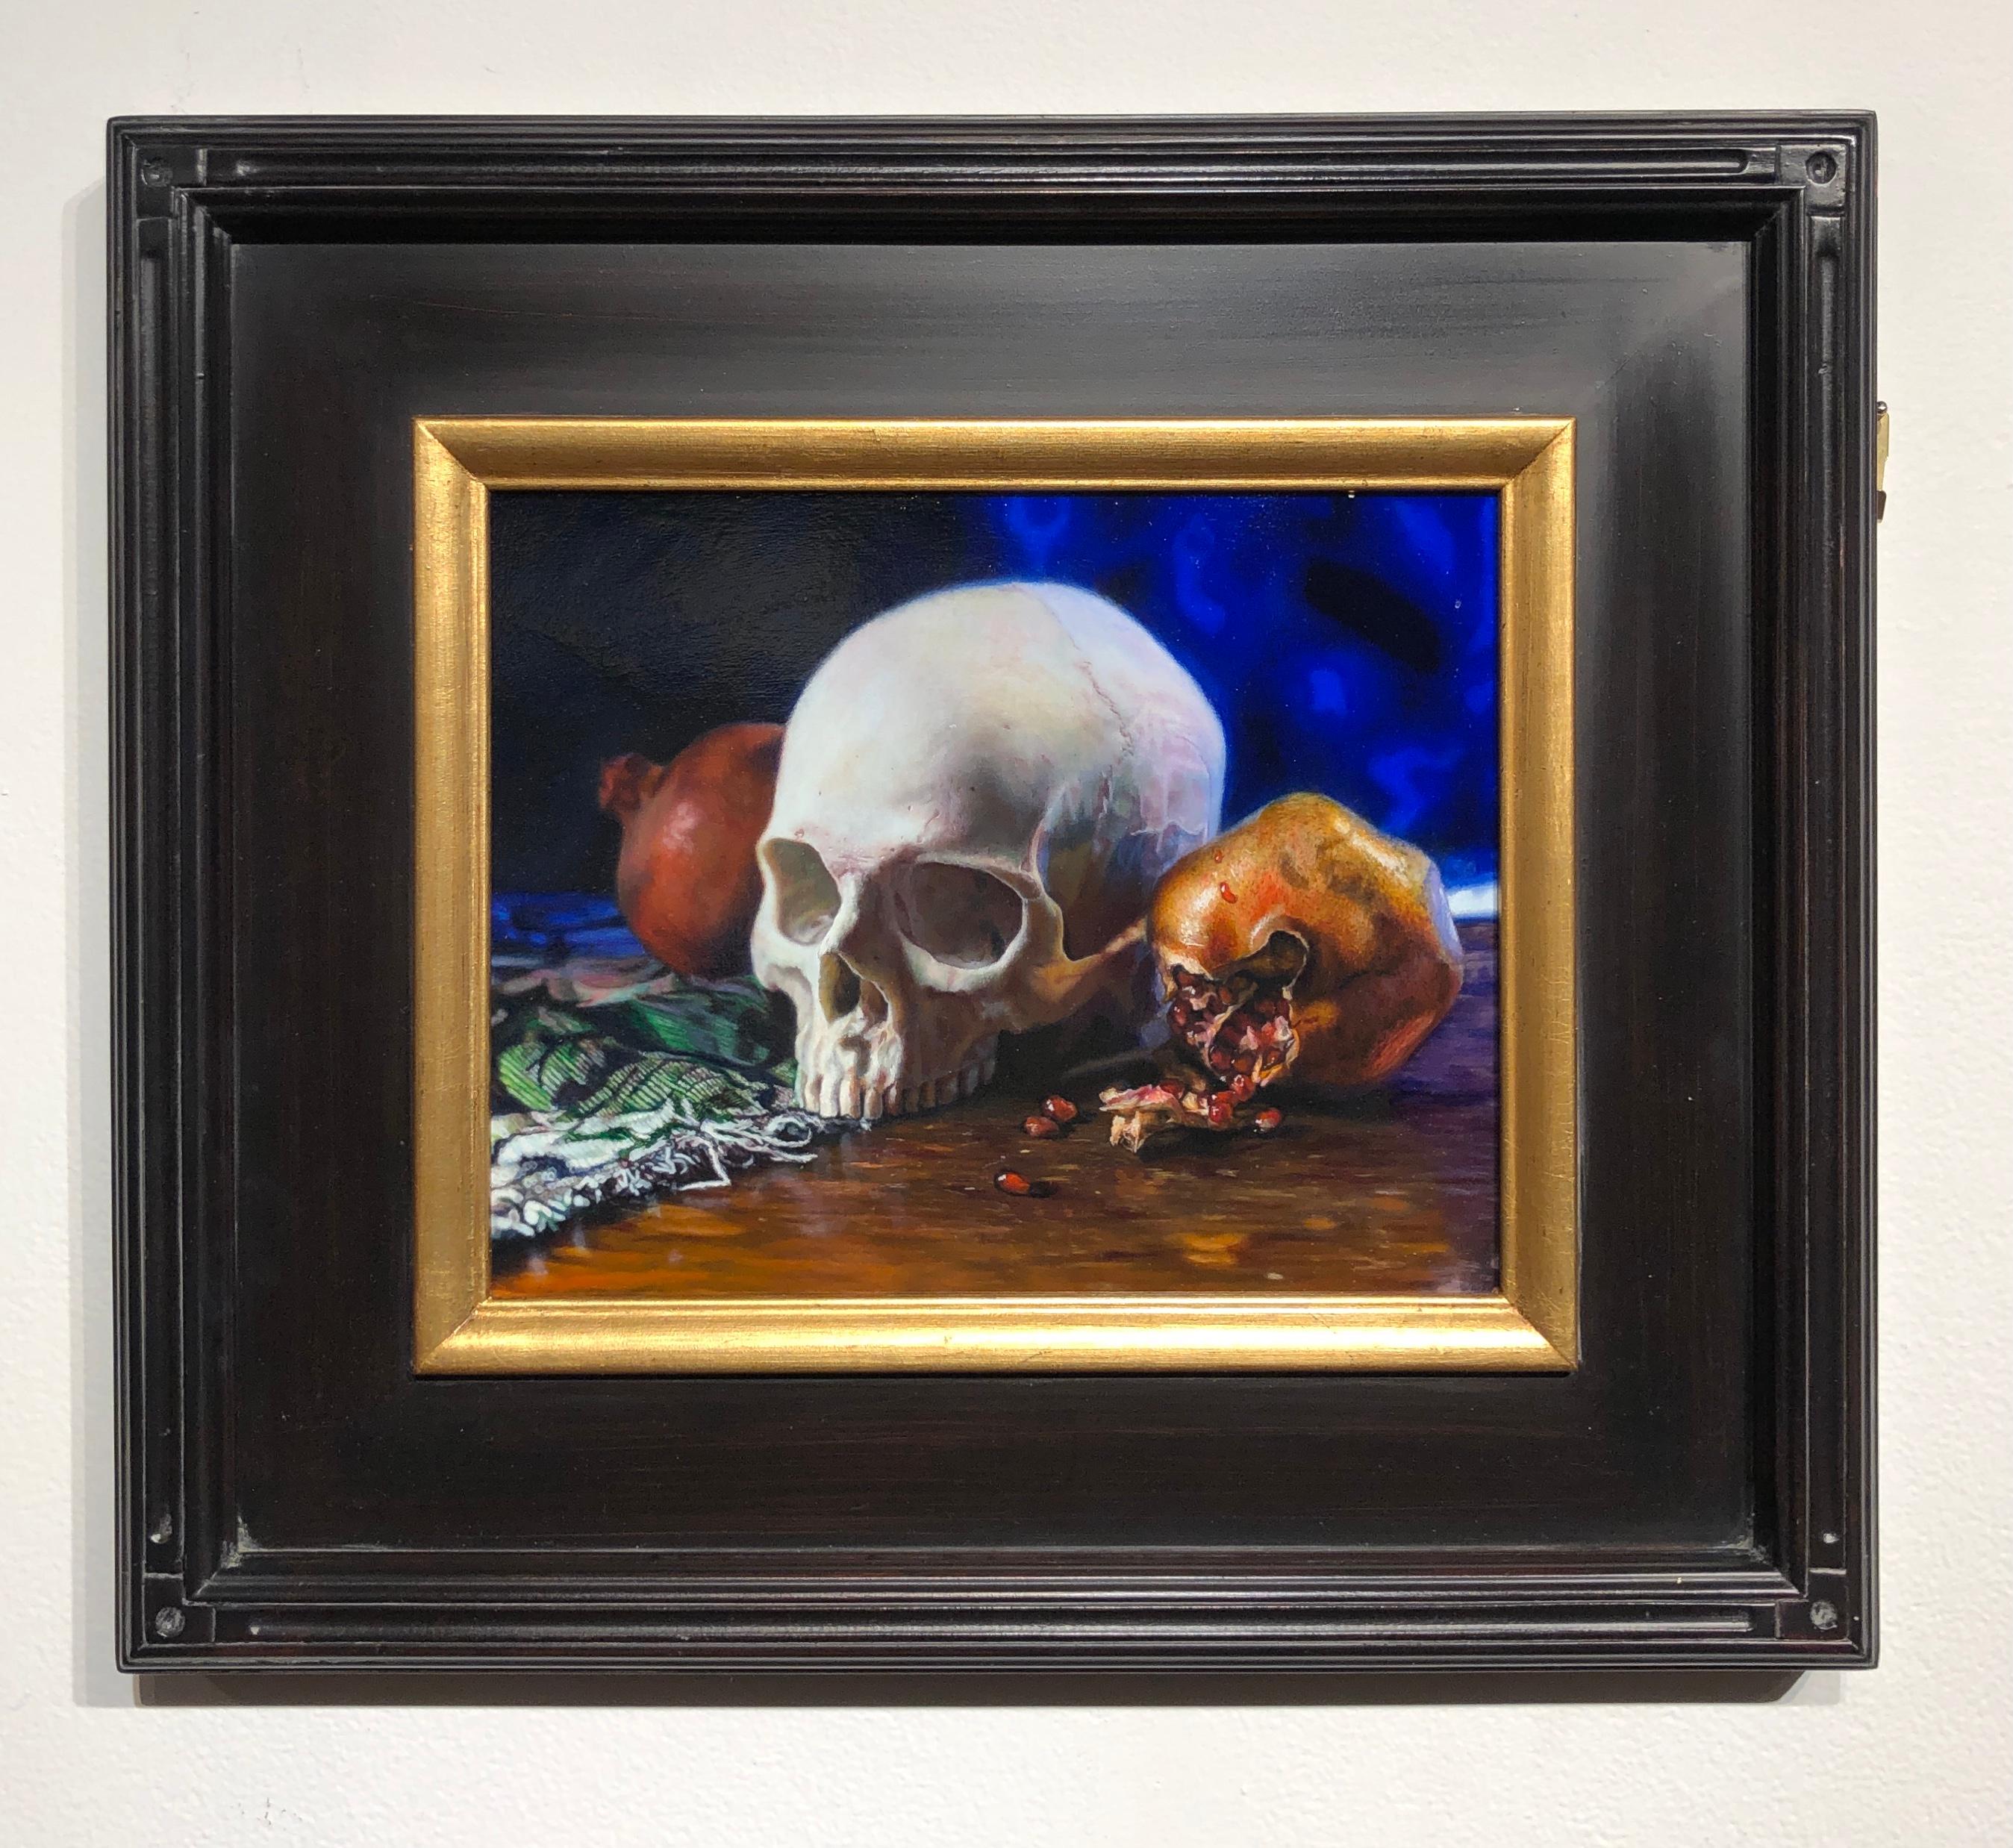 human skull painting